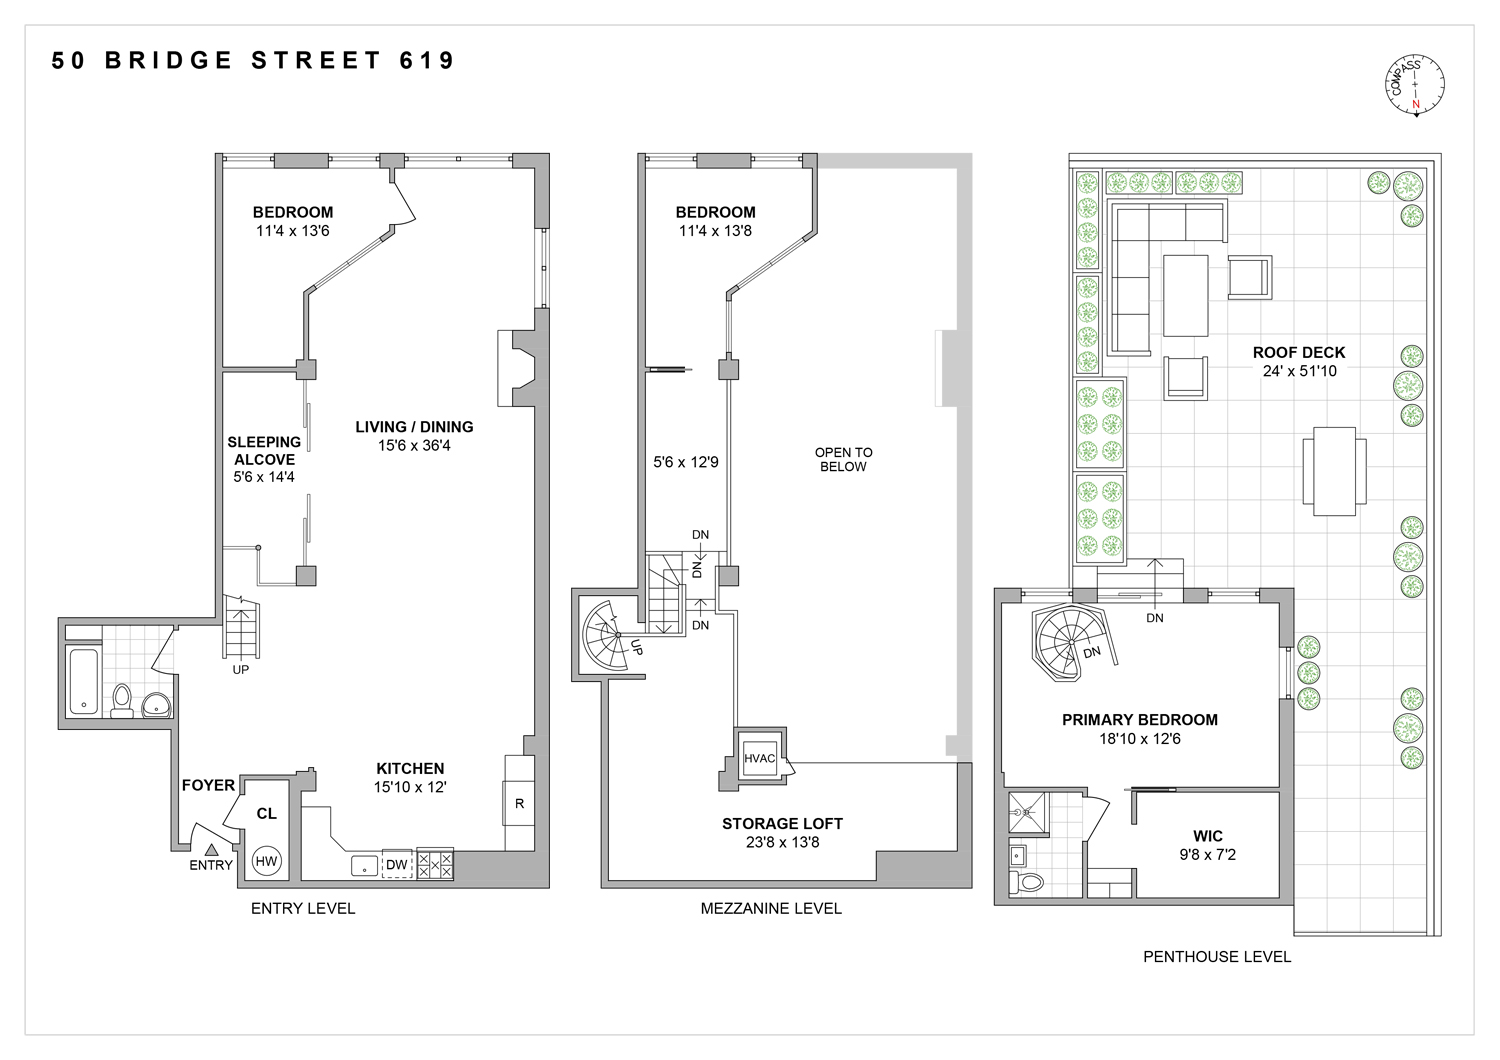 Floorplan for 50 Bridge Street, 619